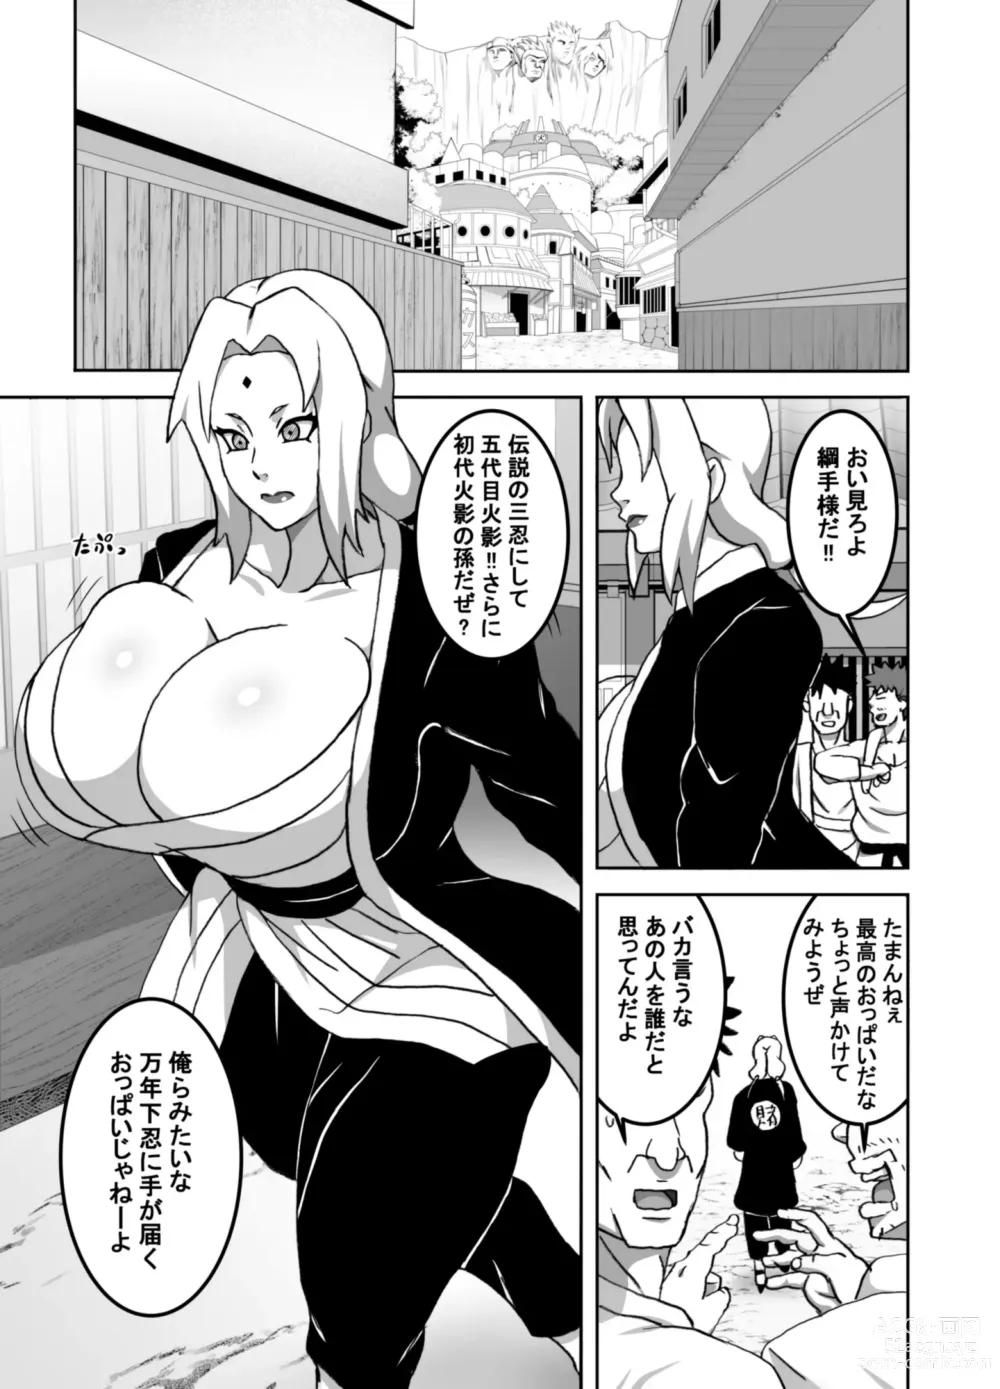 Page 3 of doujinshi Torotsuna